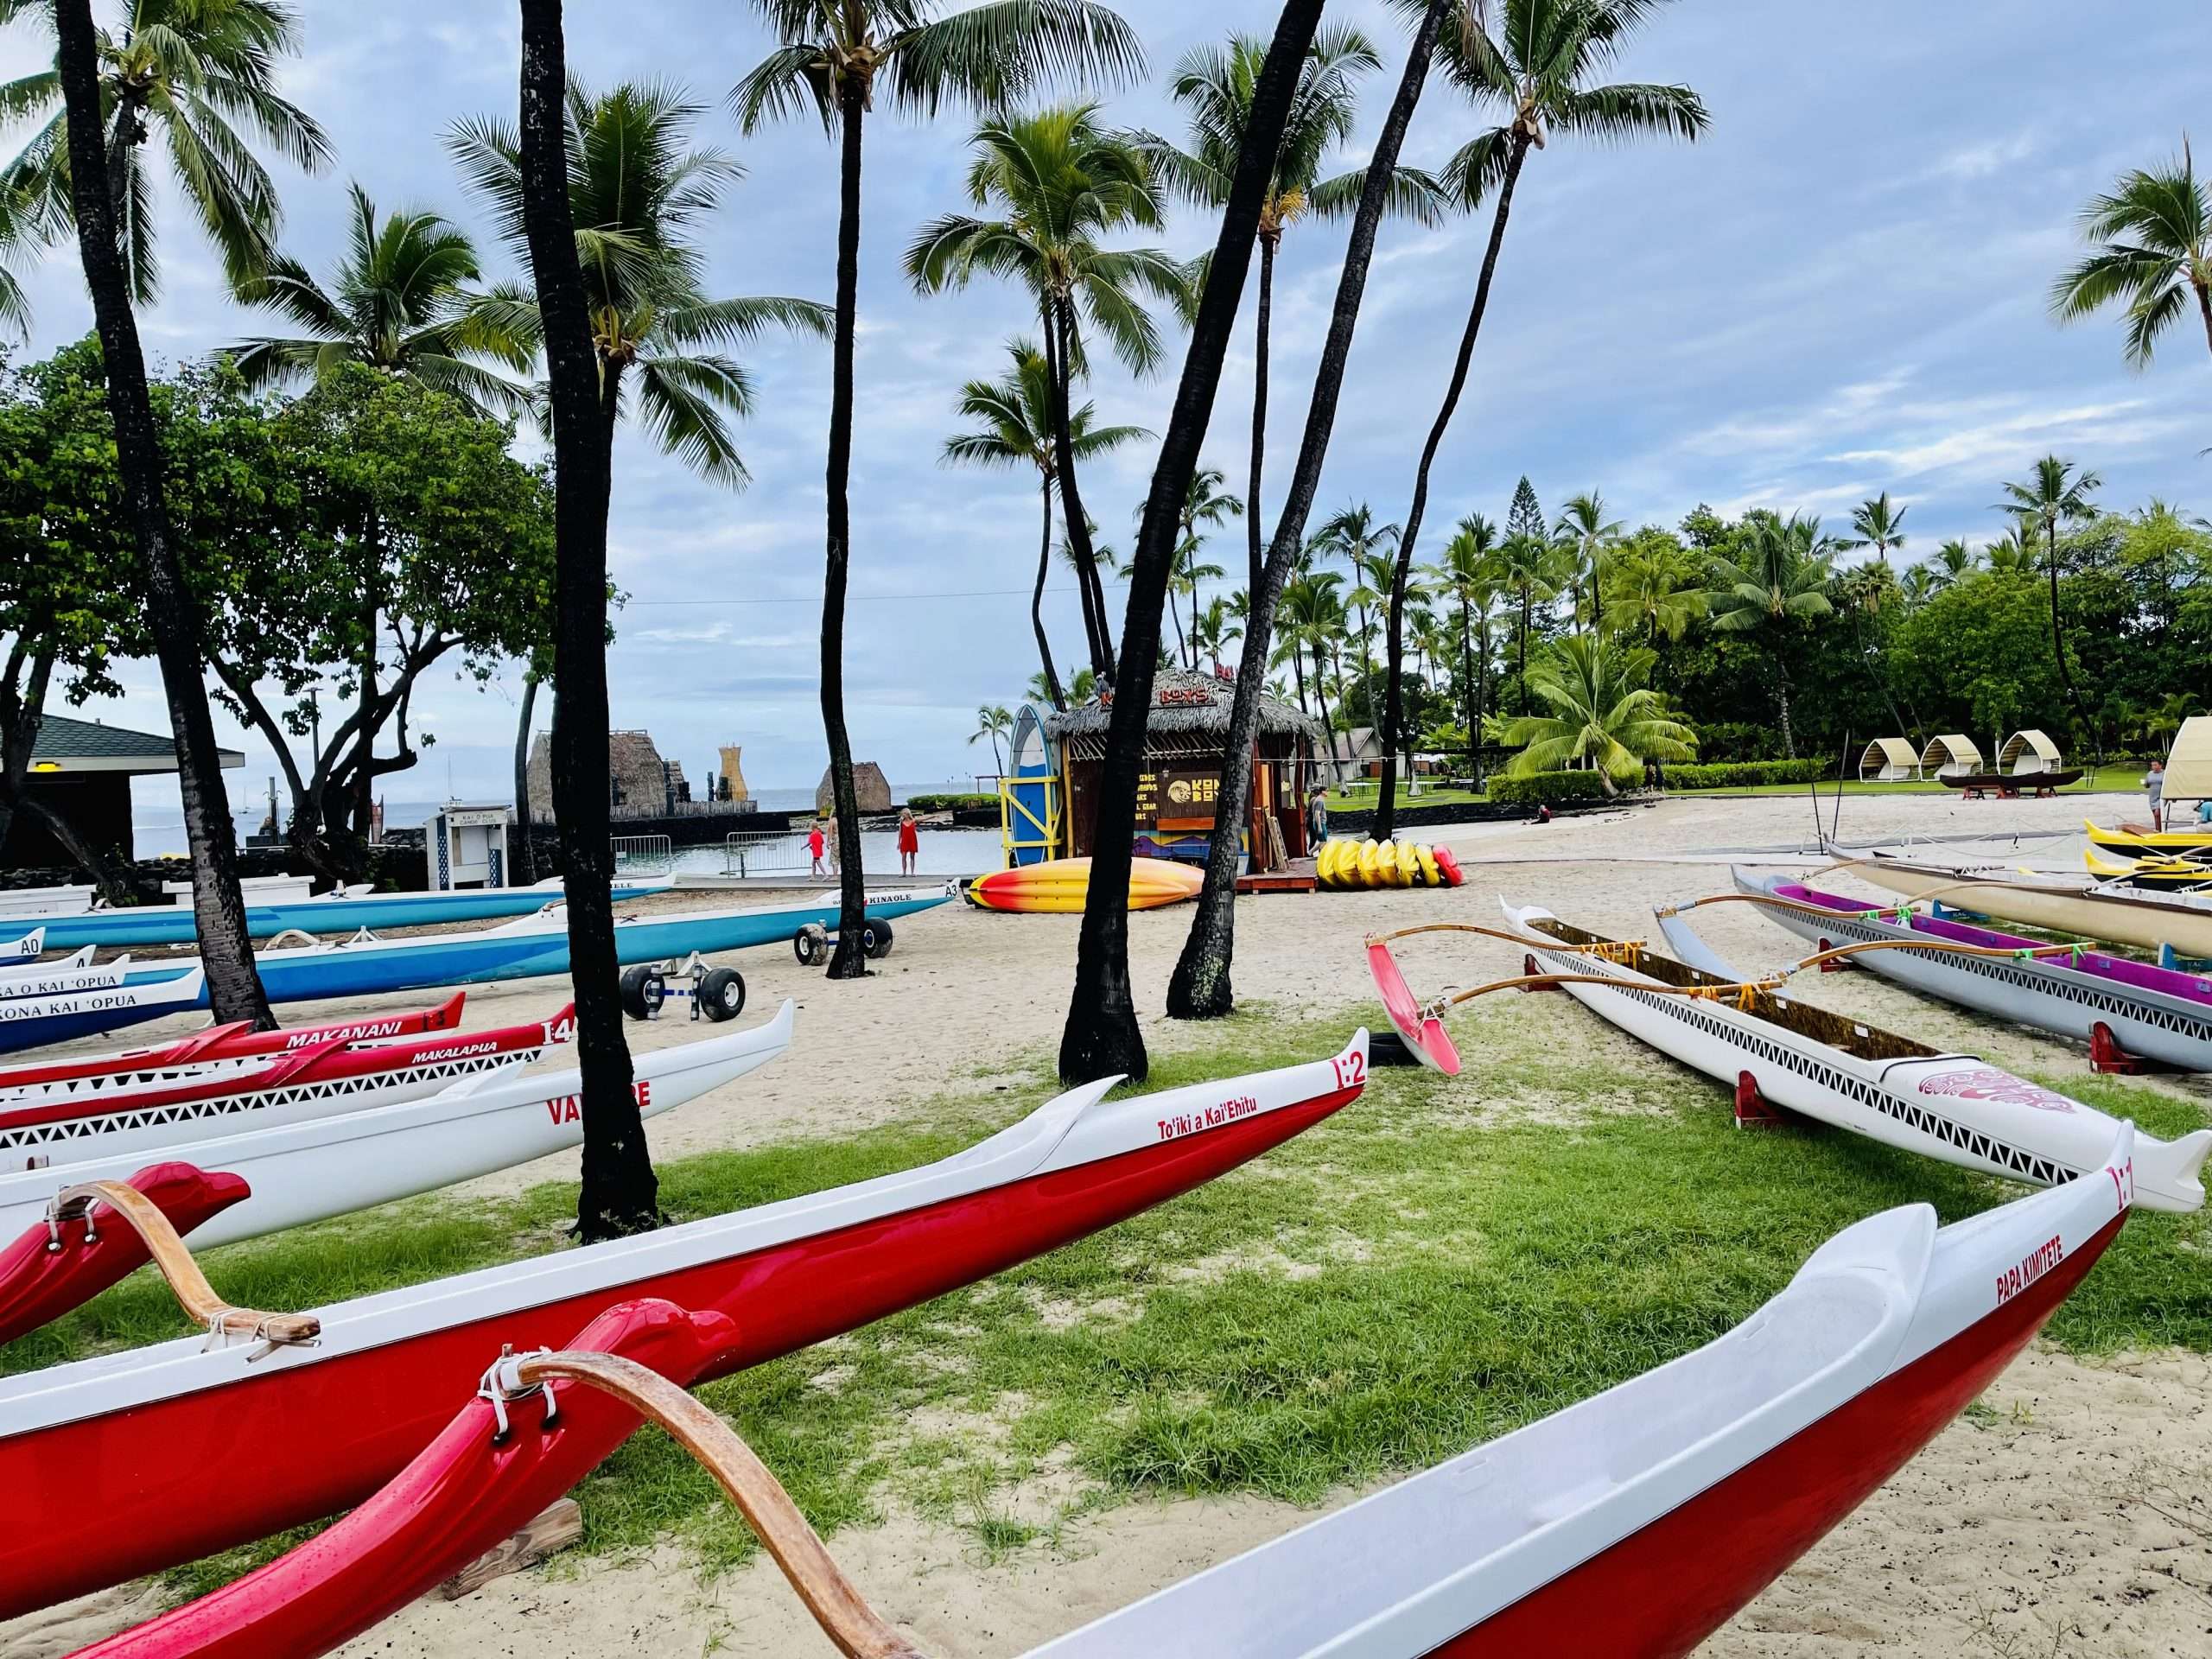 Outrigger Canoes at Kamehameha Beach/ Kamakahonu, located in front of Courtyard Marriott King Kamehameha Beach Hotel, hotel grounds. Photo Credit: BIR